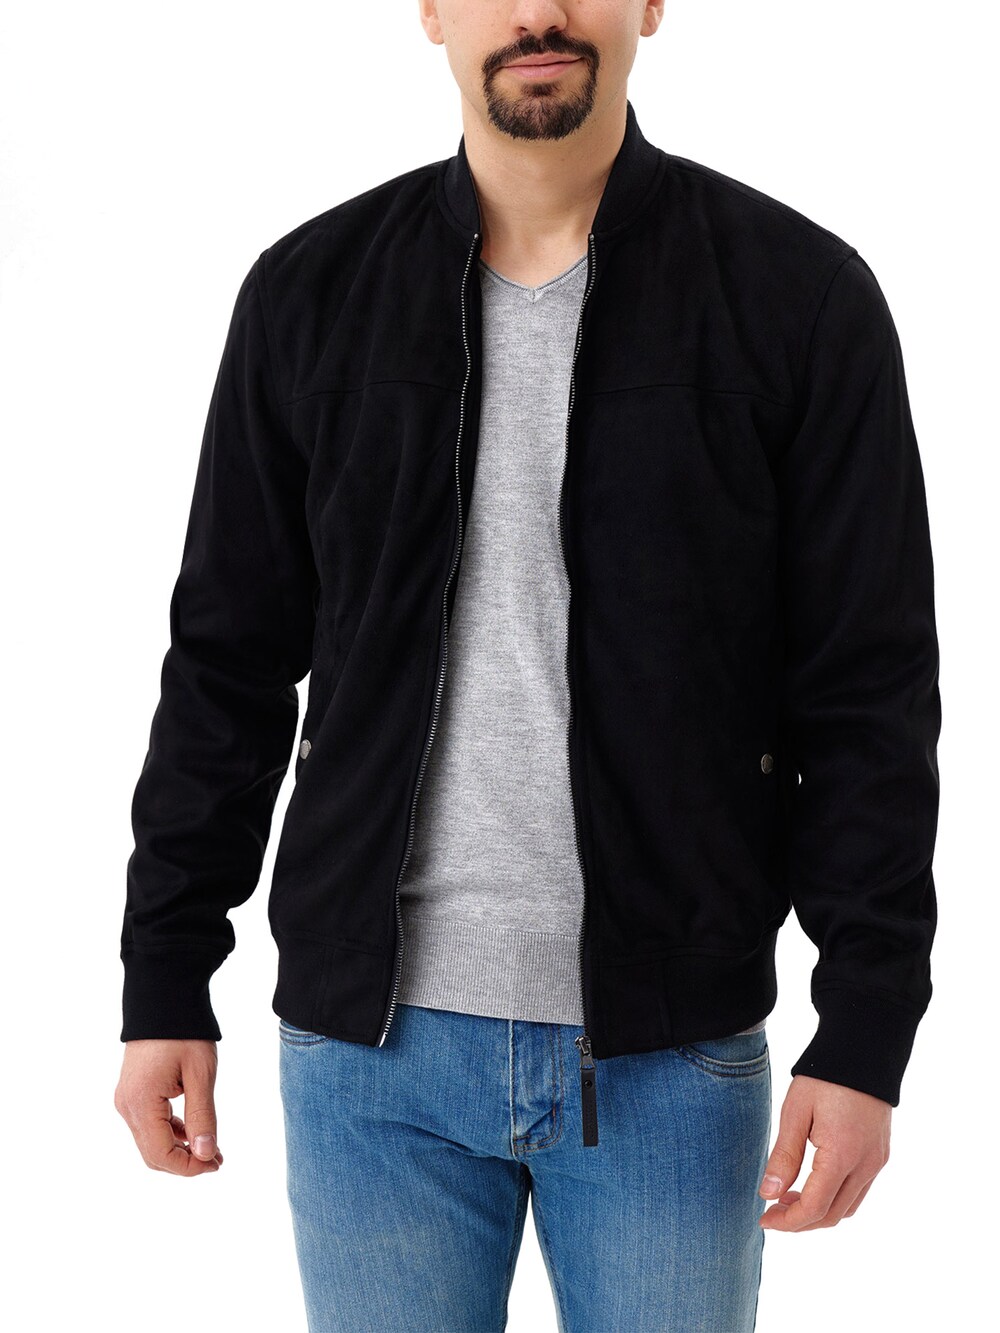 Межсезонная куртка INDICODE JEANS Abbott, черный межсезонная куртка indicode jeans aaron черный